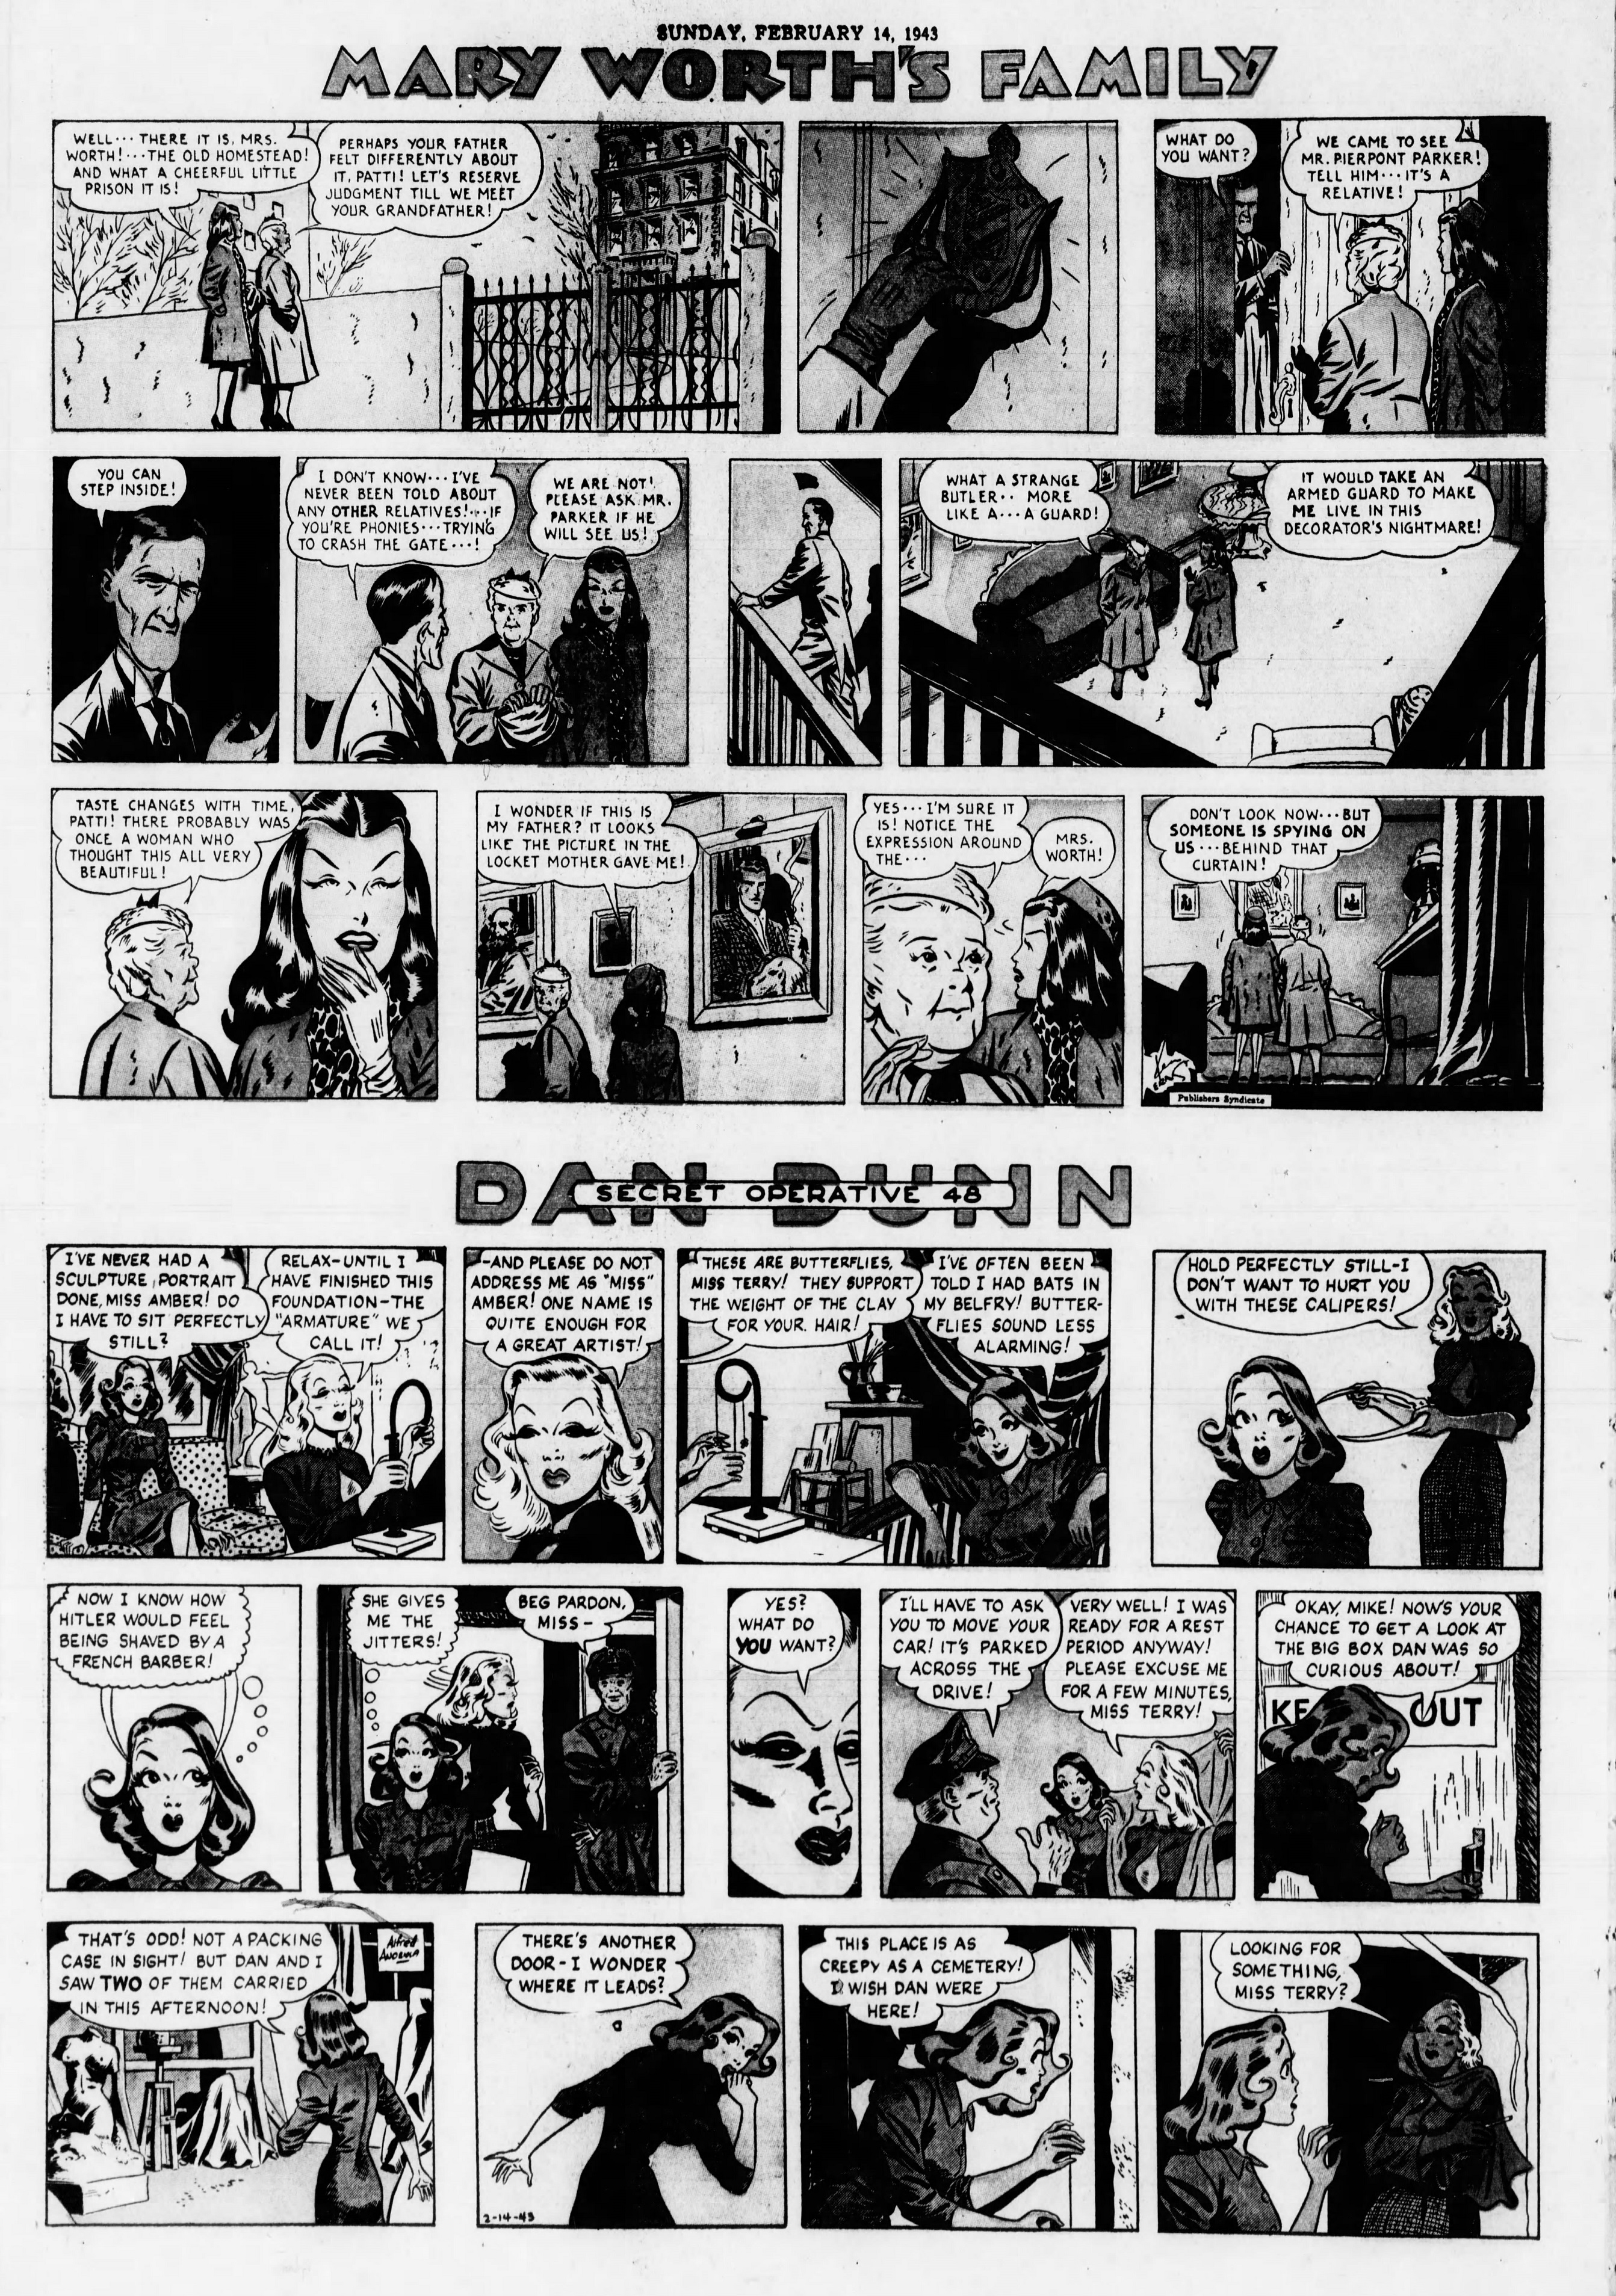 The_Brooklyn_Daily_Eagle_Sun__Feb_14__1943_(9).jpg